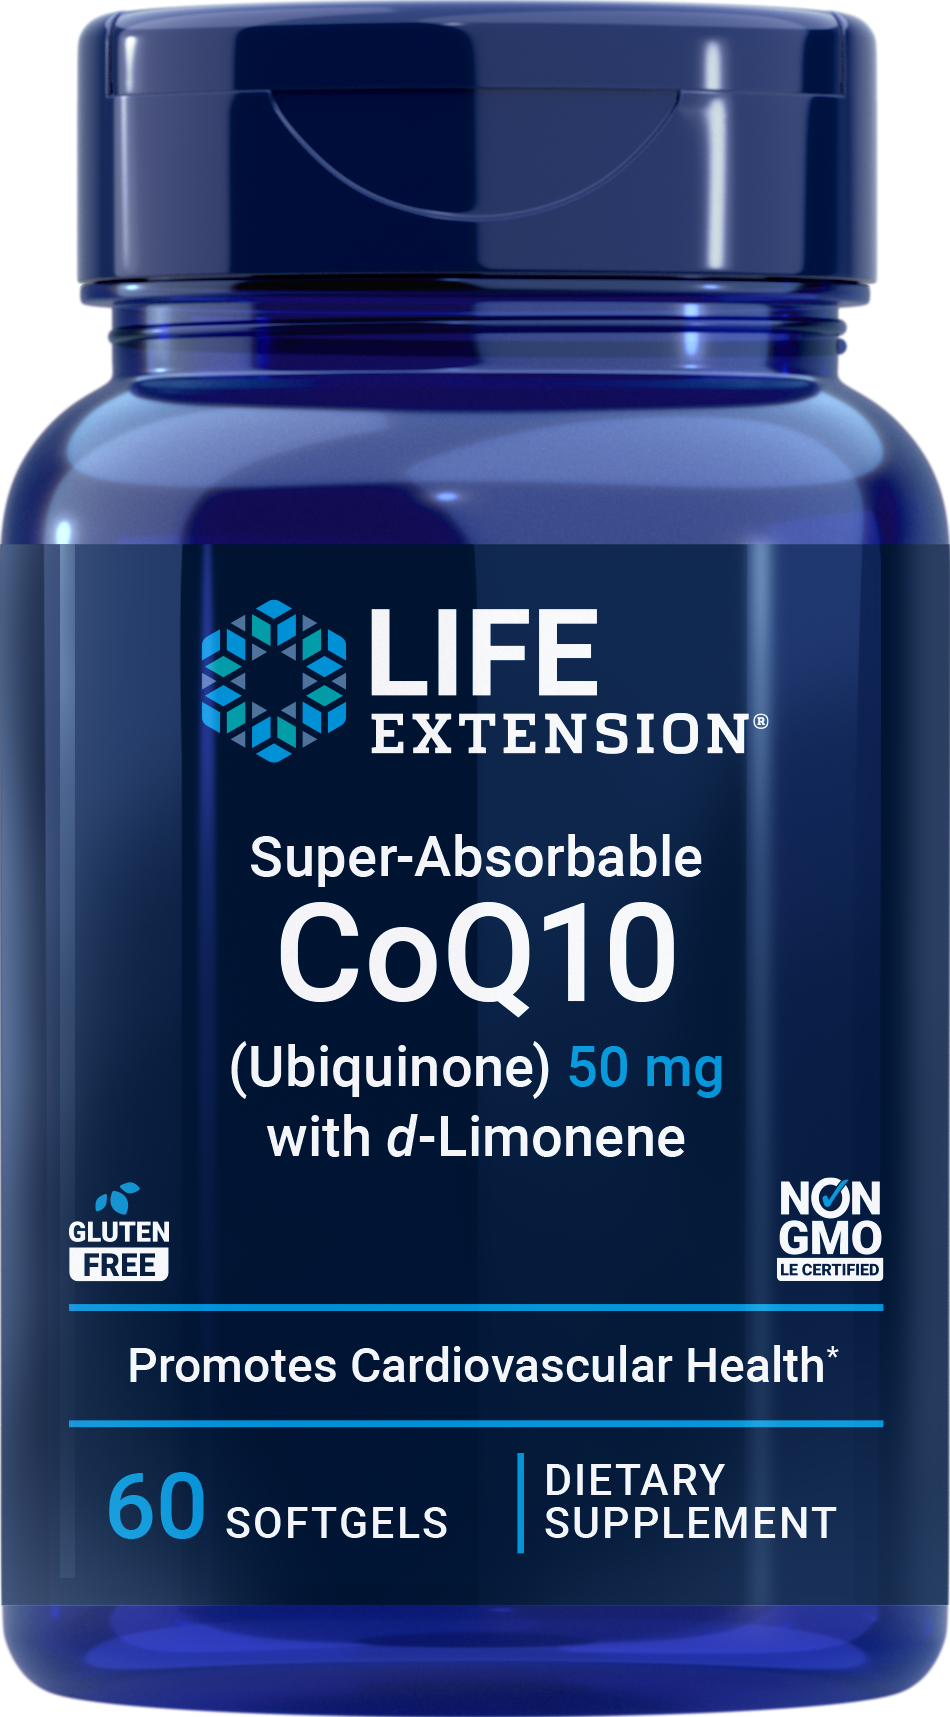 Super-Absorbable Ubiquinone CoQ10 with d-Limonene, 60 softgels